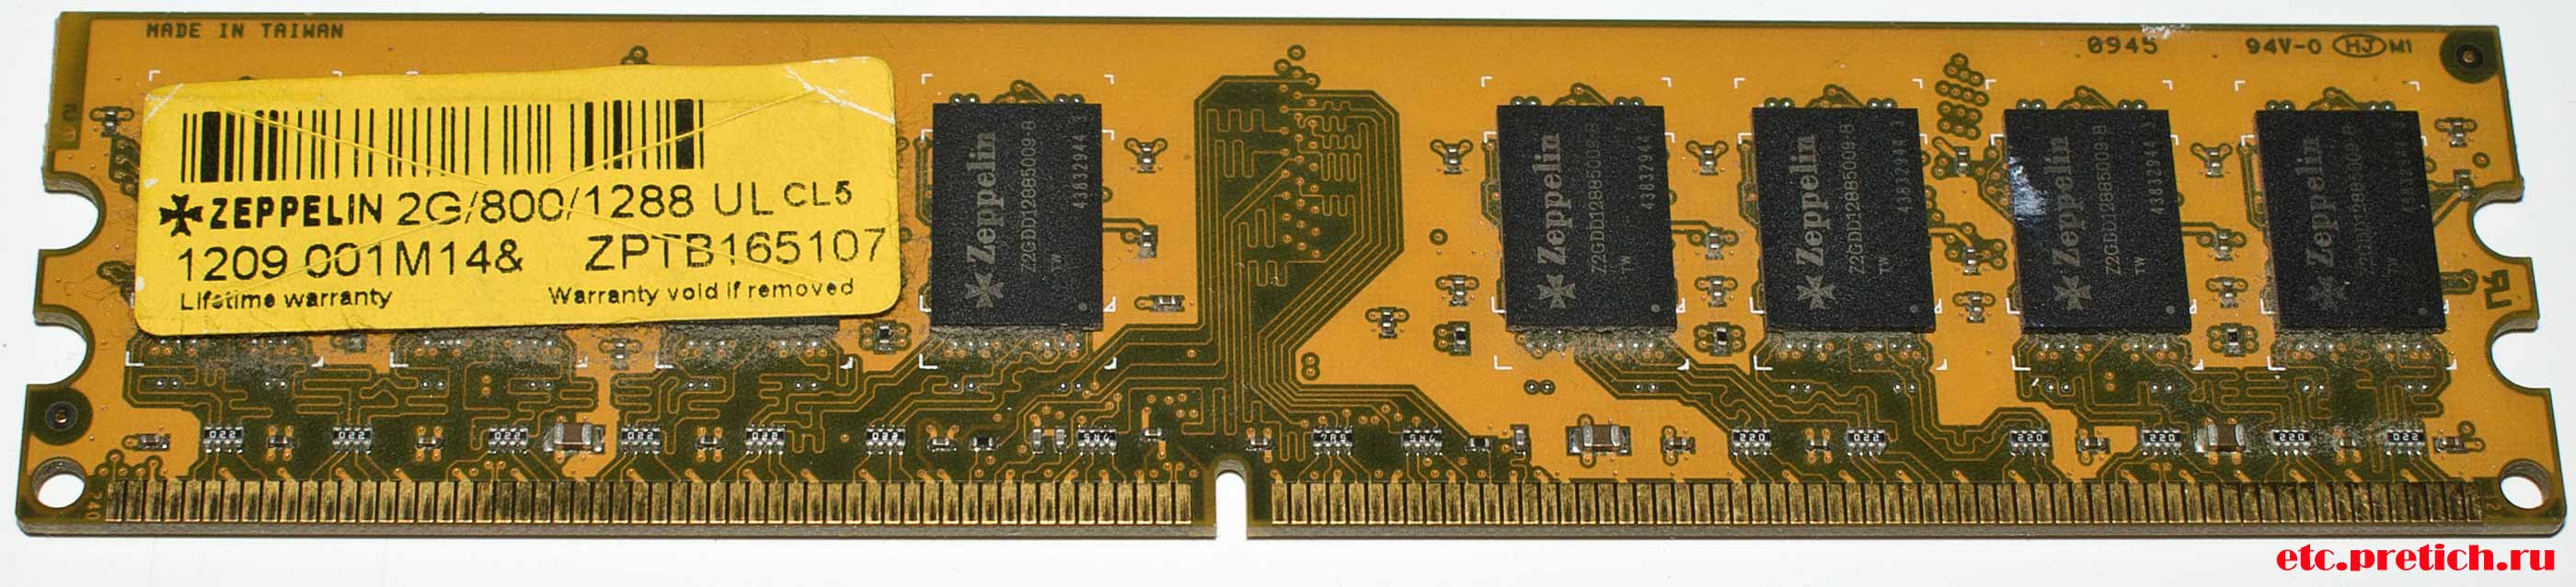 Zeppelin 2G/800/1288 ULcl5 полное описание оперативной памяти DDR2 для ПК